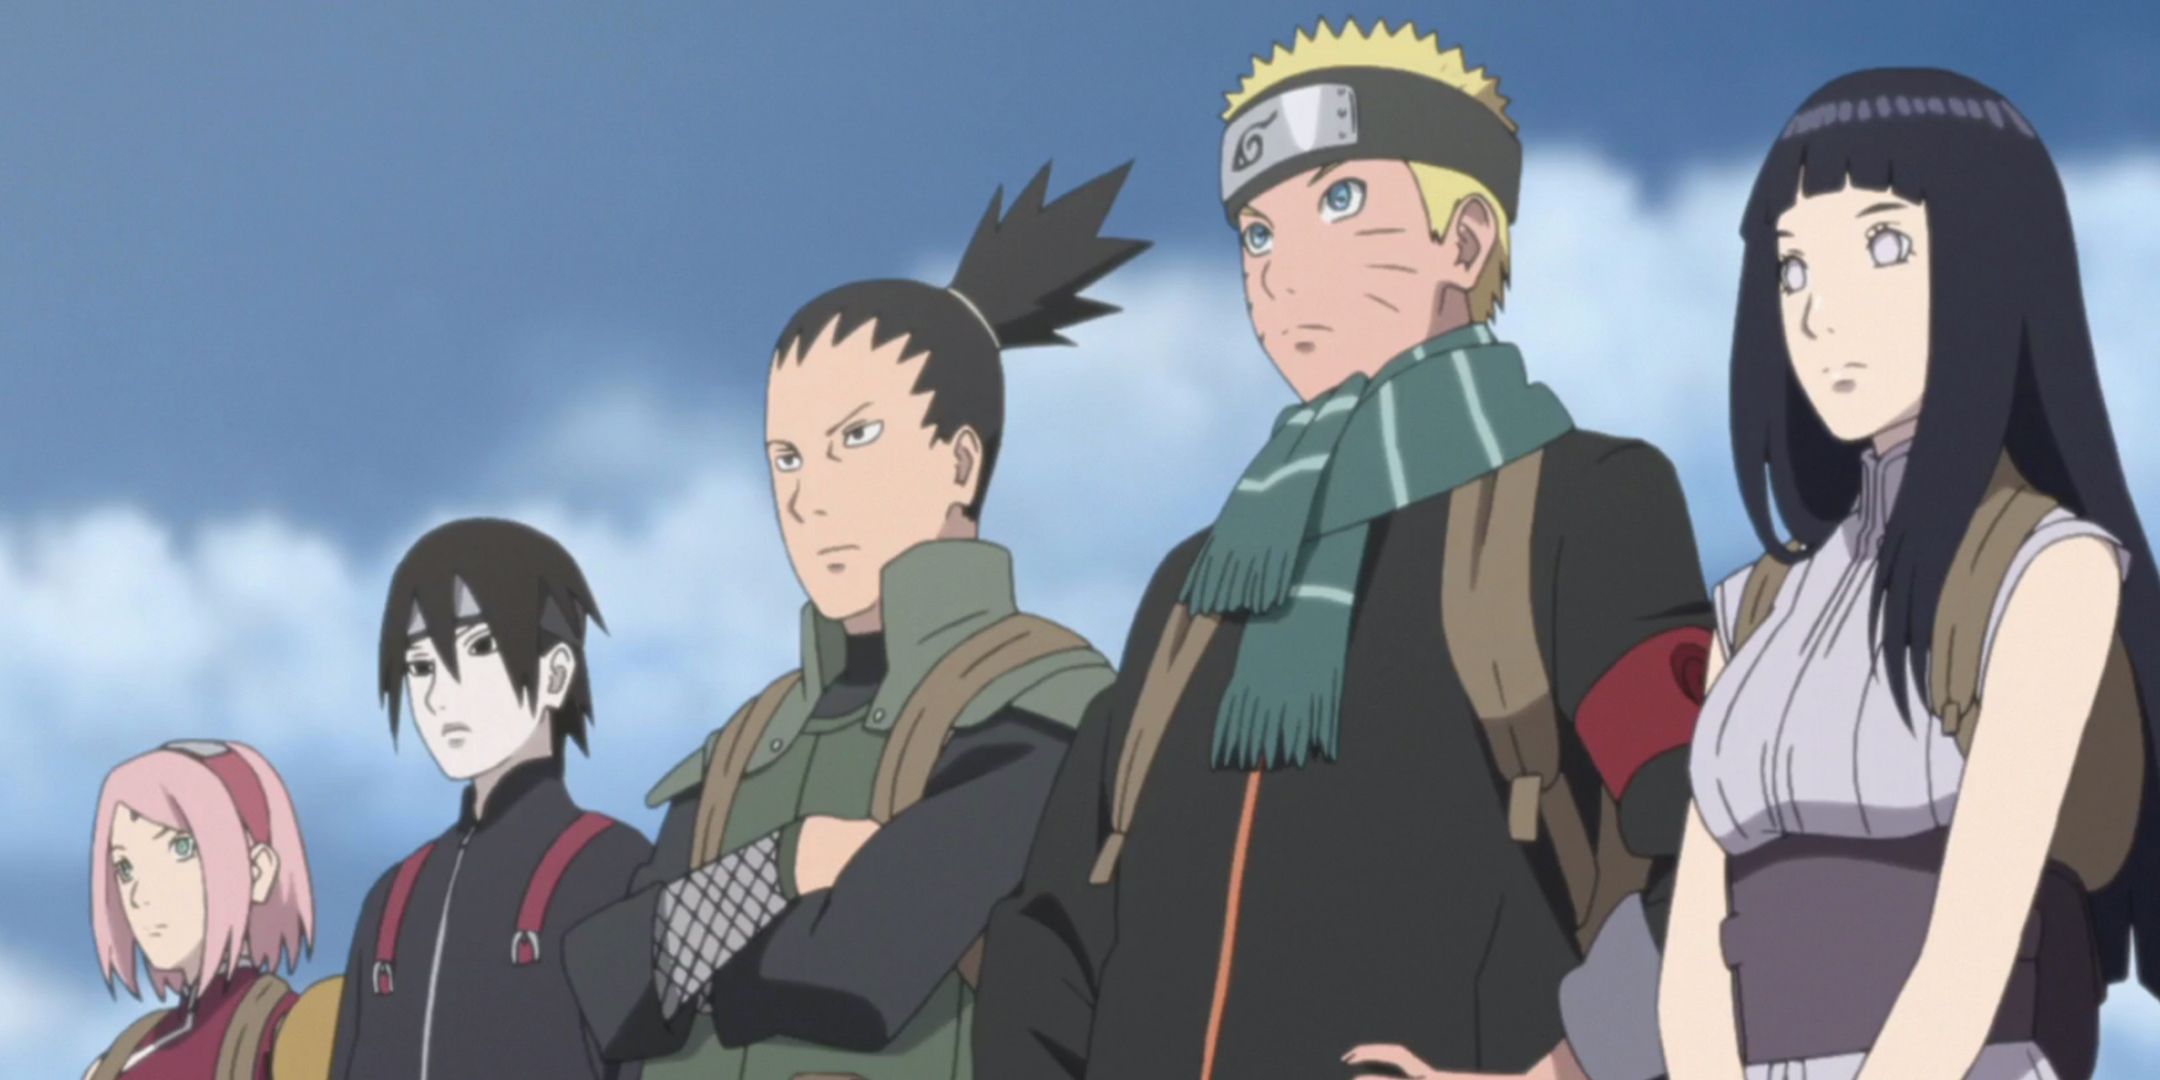 Sakura, Sai, Shikamaru, Naruto, and Hinata stand together ready to depart to rescue Hanabi in The Last: Naruto The Movie